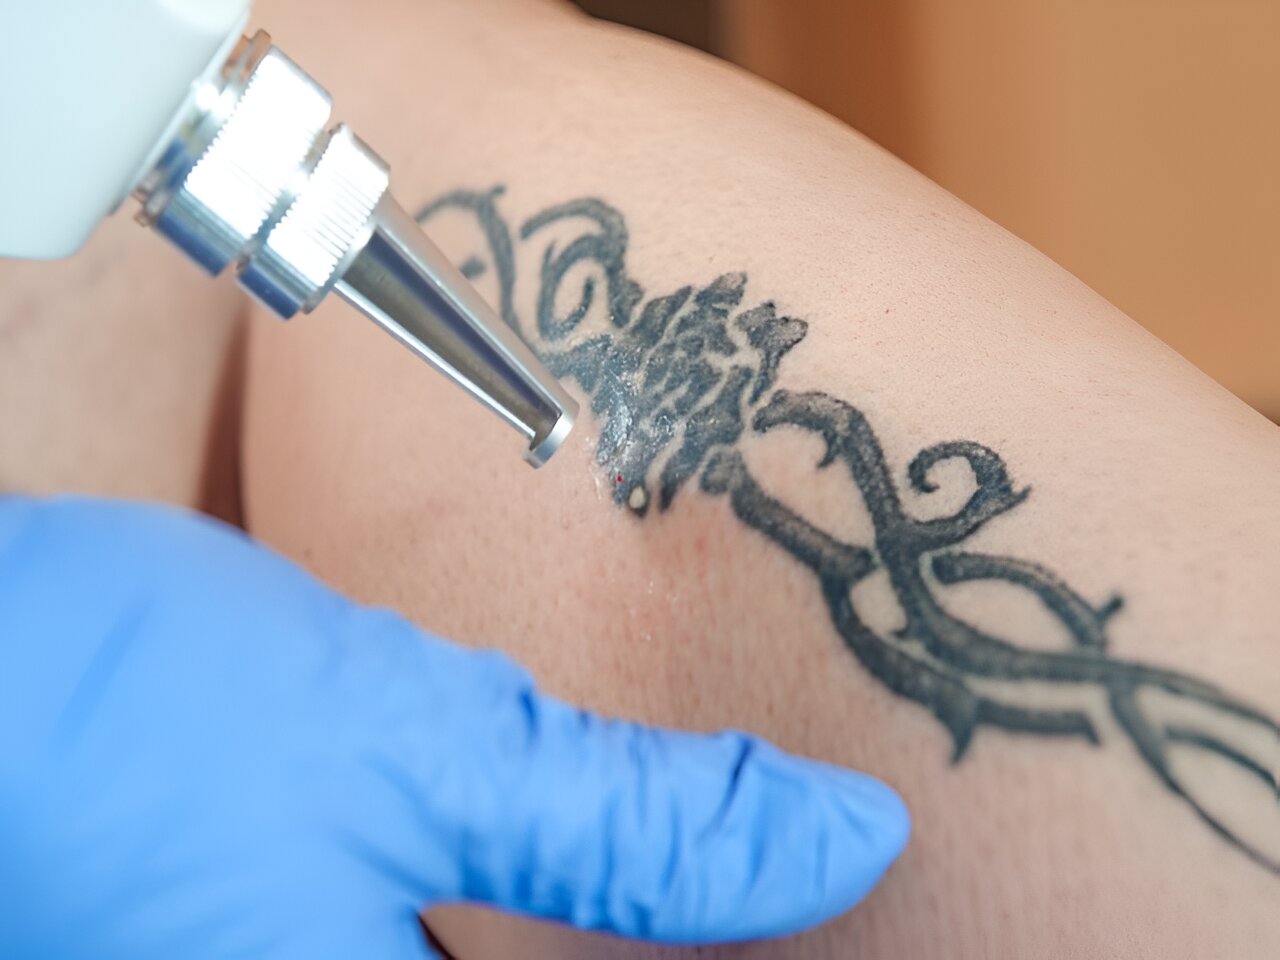 Tattoo bleeding ink Should You Worry